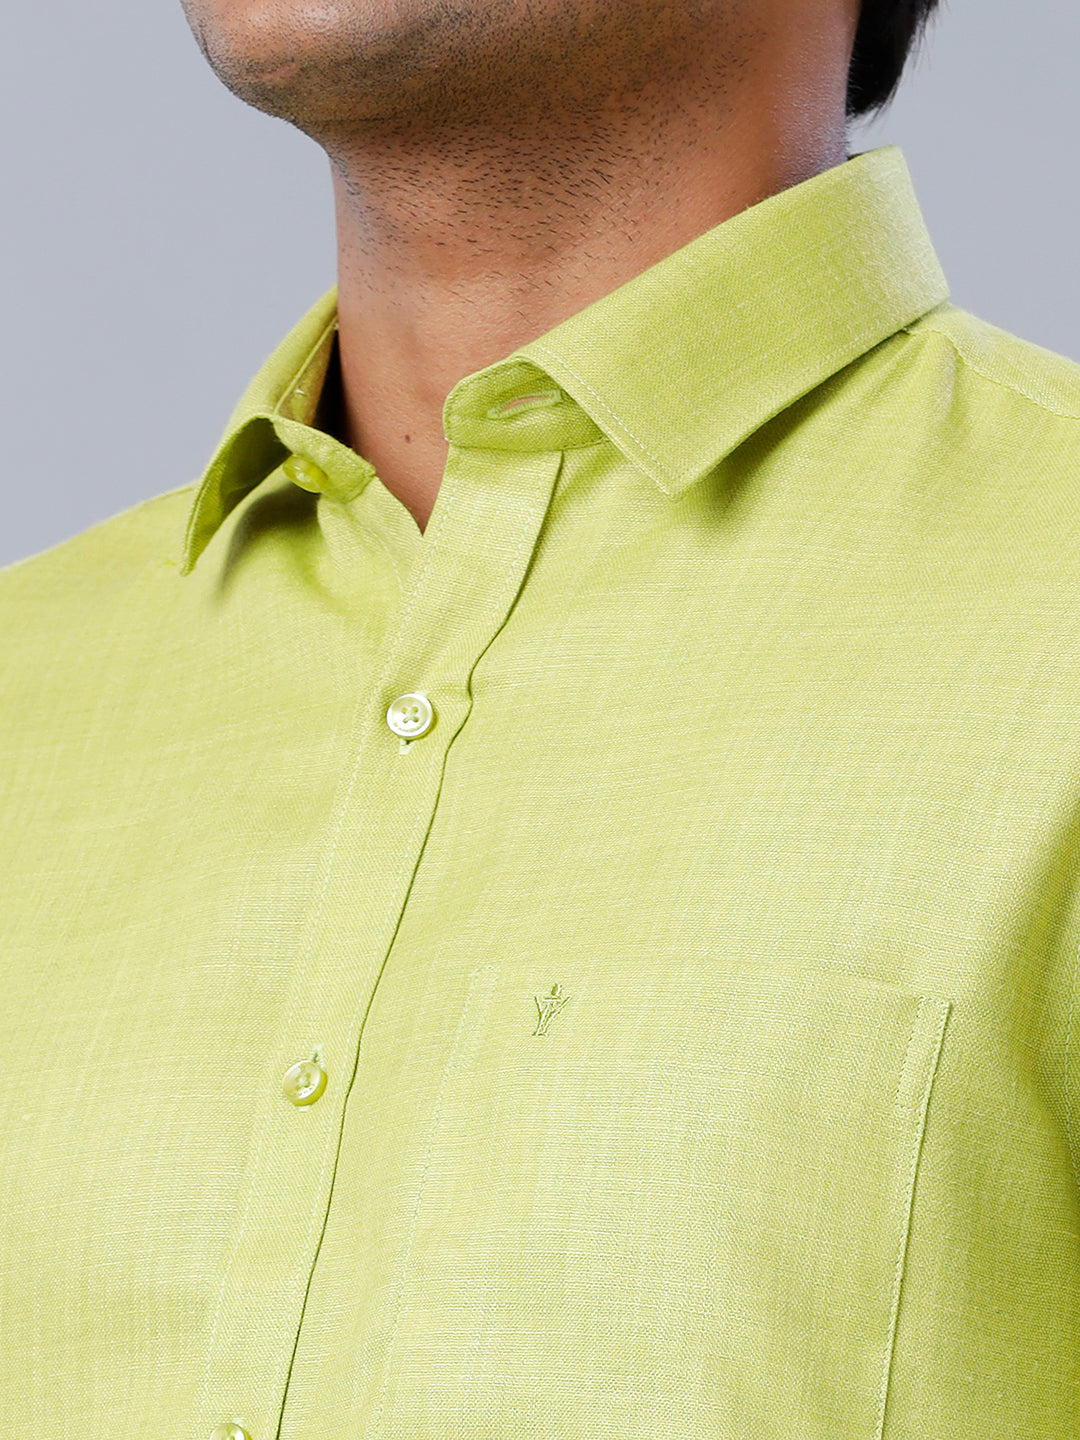 Mens Formal Shirt Half Sleeves Green T41 TQ2-Zoom view